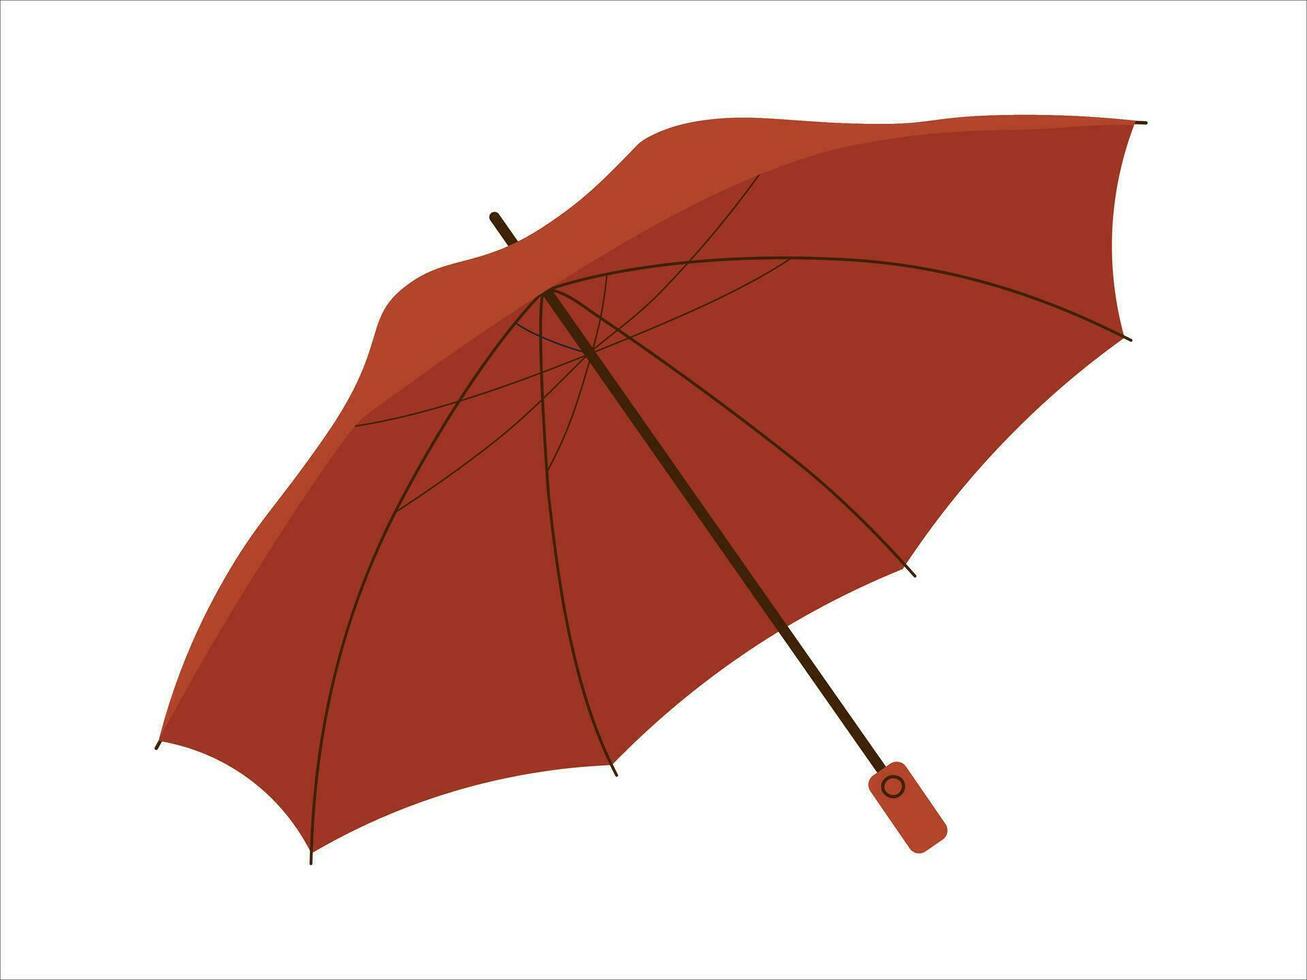 rood gevouwen paraplu. vector illustratie in vlak stijl